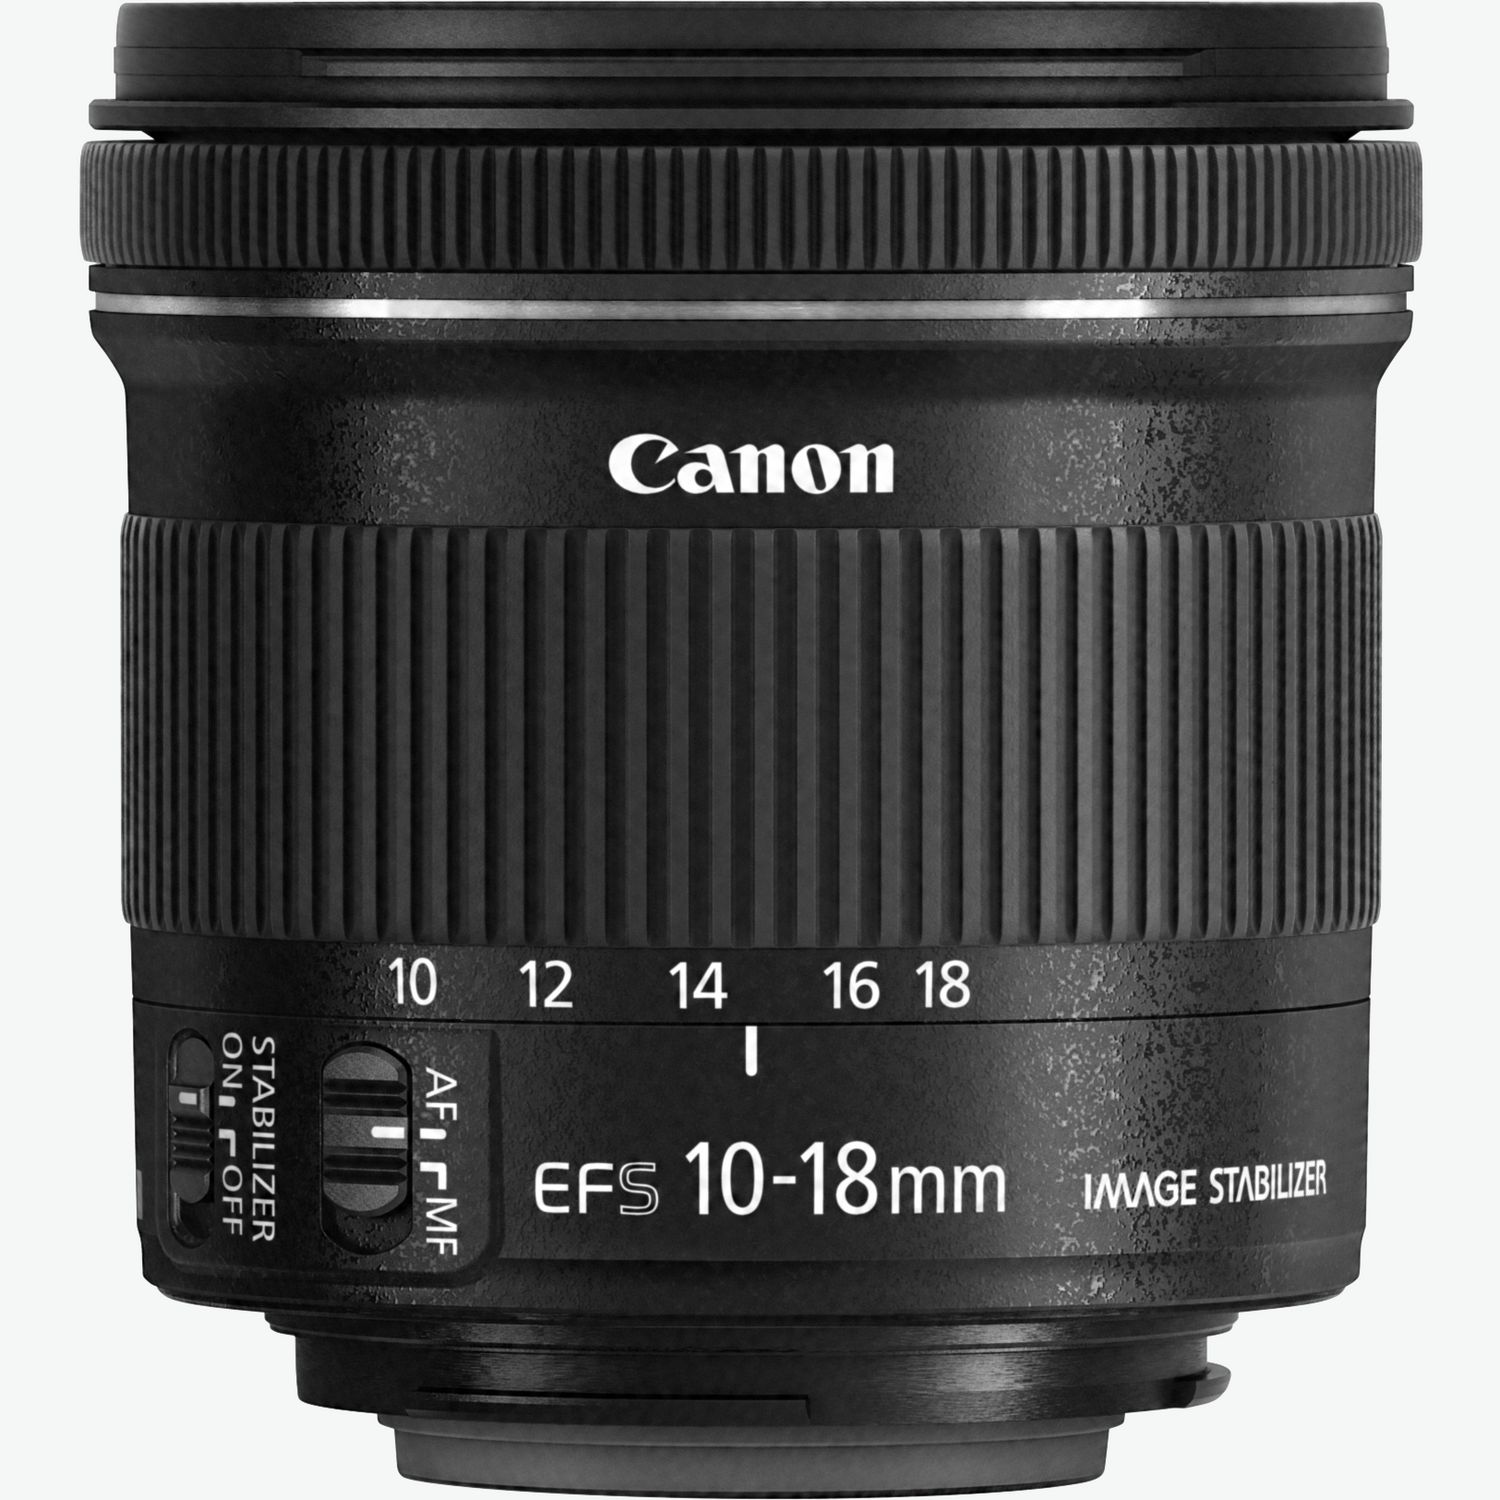 Buy Canon EOS 4000D EF-S + Schwarz Objektiv in + — + III Canon Shop SD-Karte Schweiz Tasche 18-55mm WLAN-Kameras